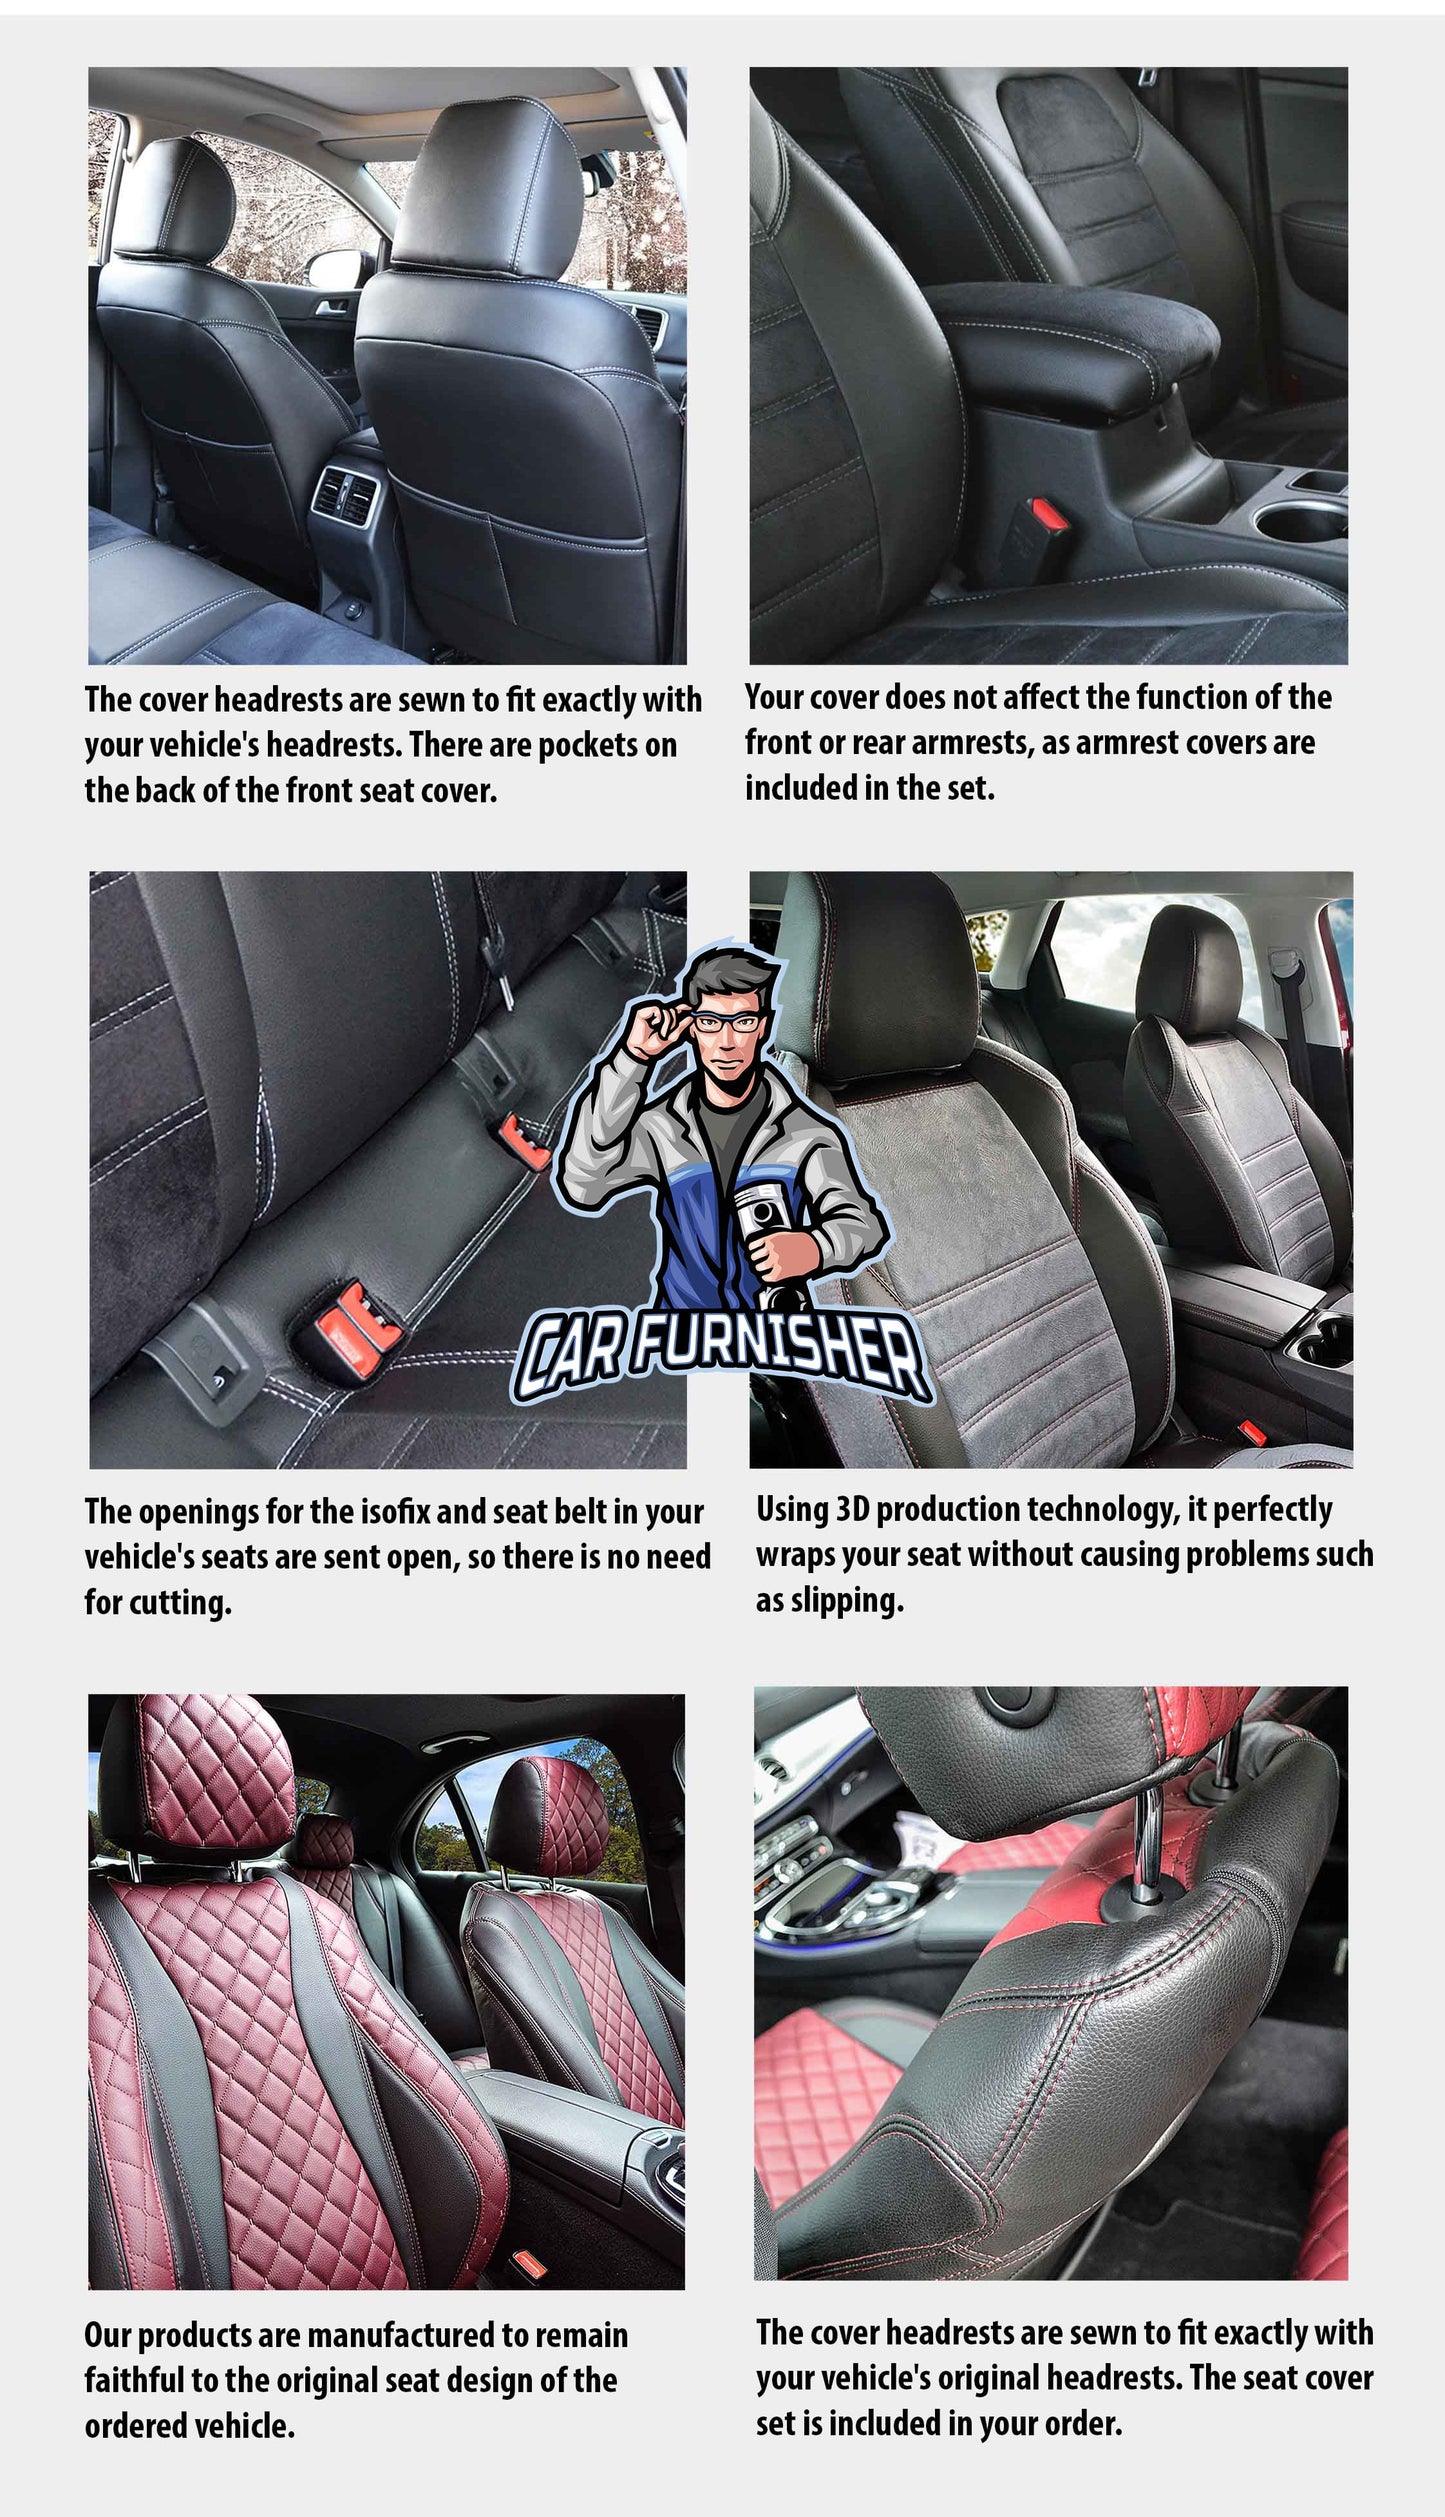 Honda CRV Seat Covers Paris Leather & Jacquard Design Red Leather & Jacquard Fabric